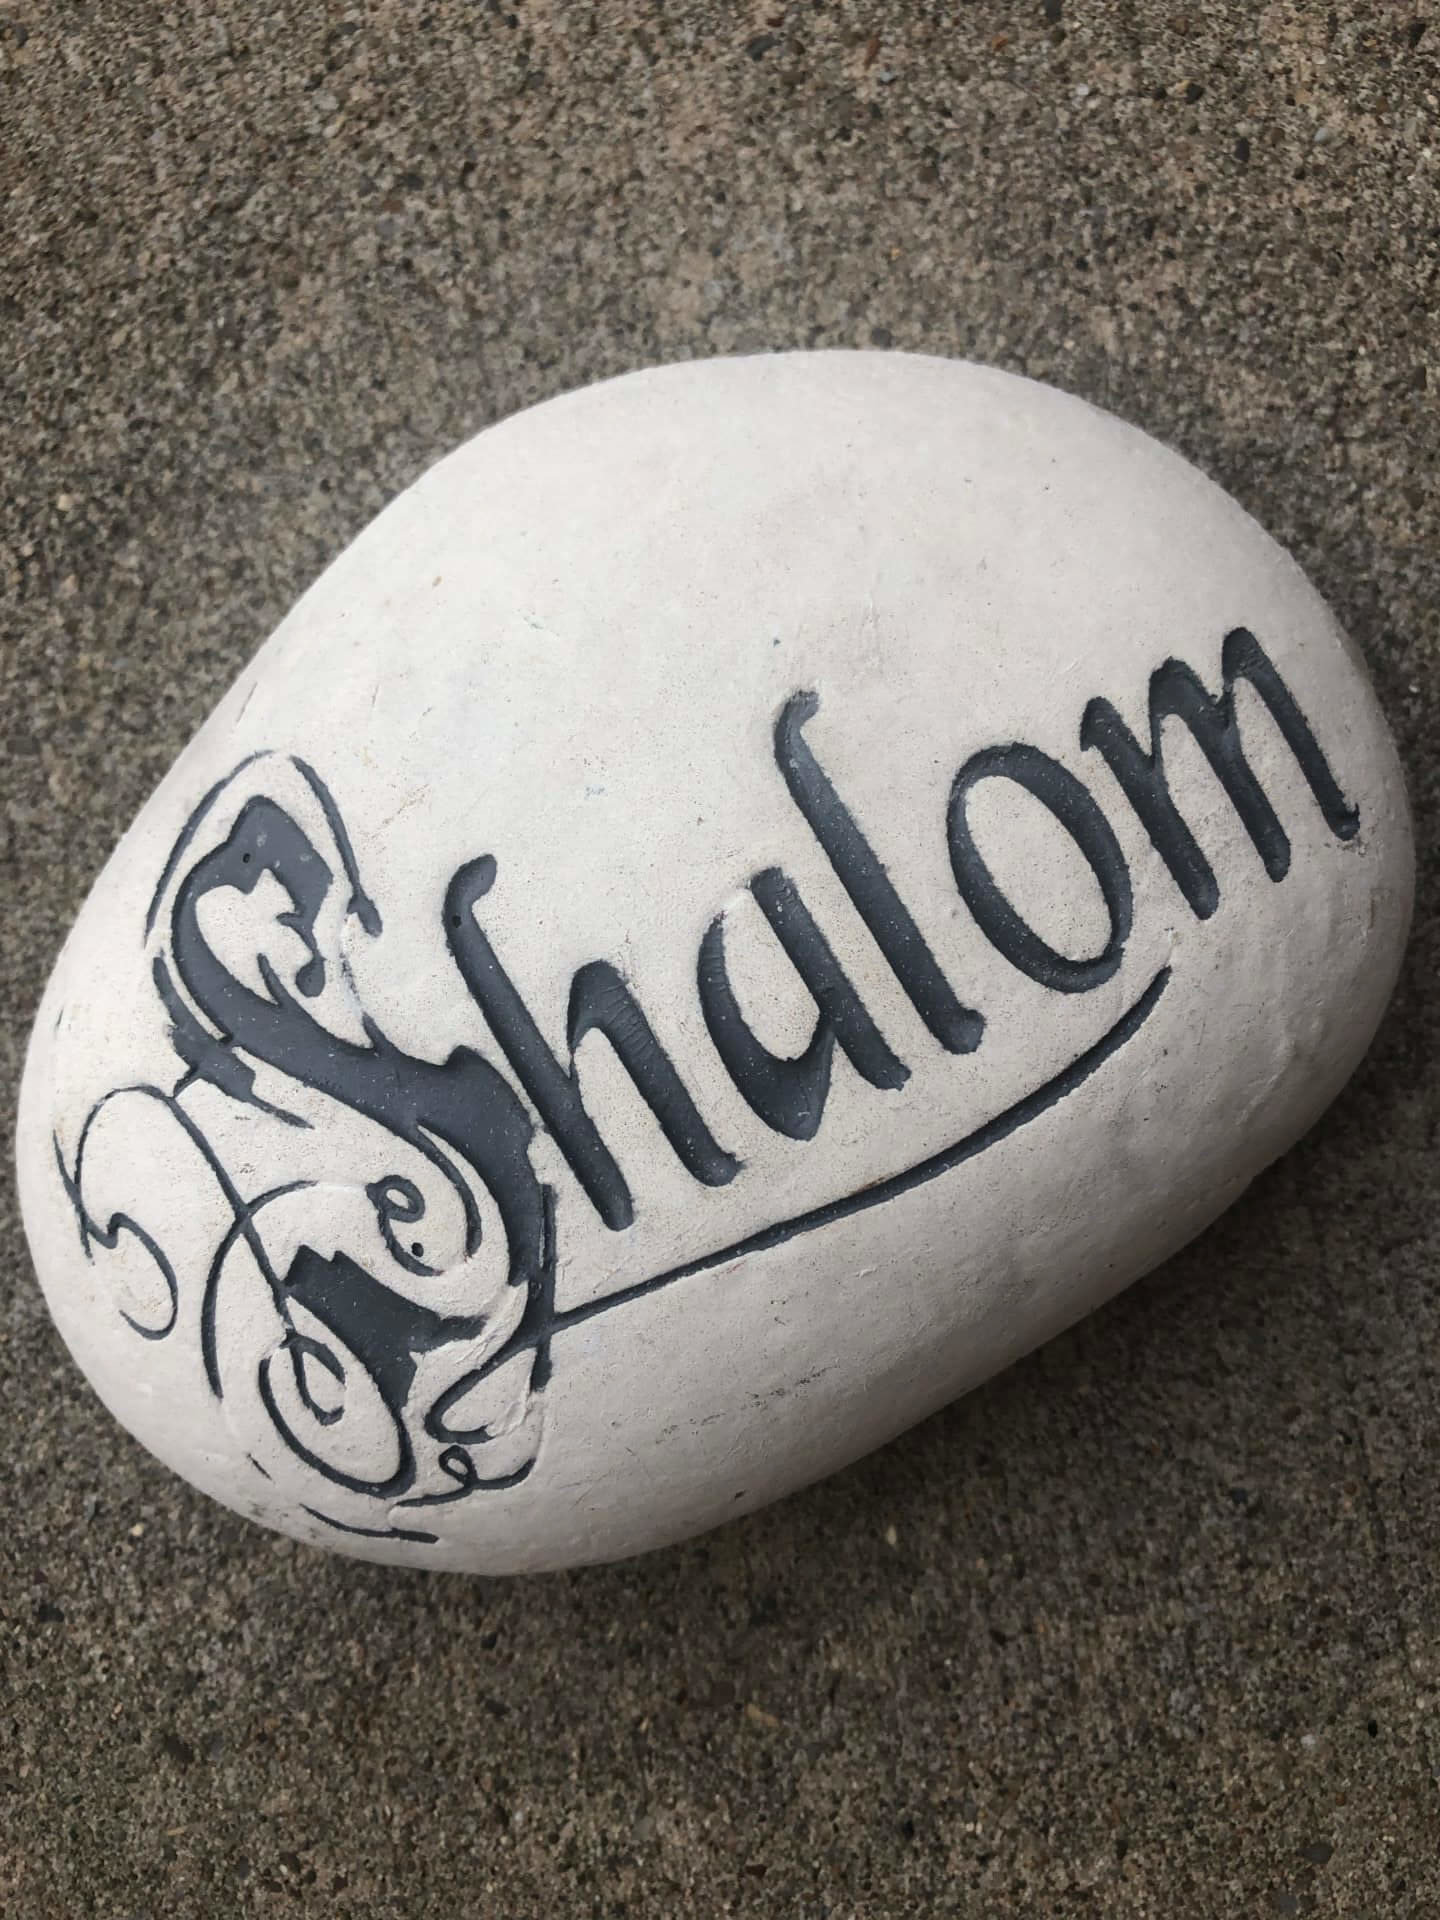 The Shalom Rock